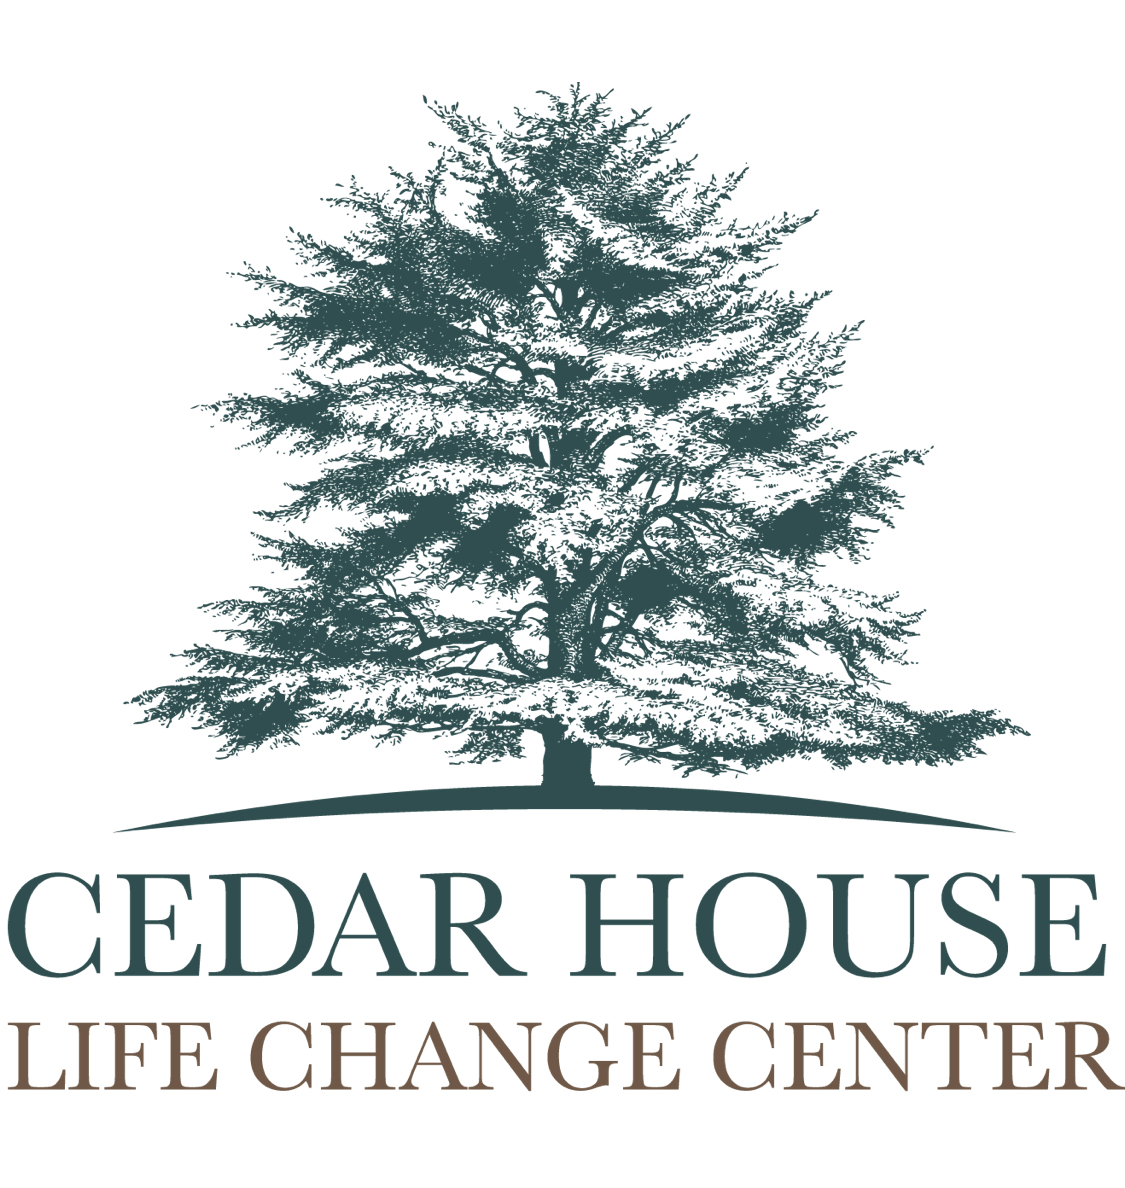 Cedar House Life Change Center logo